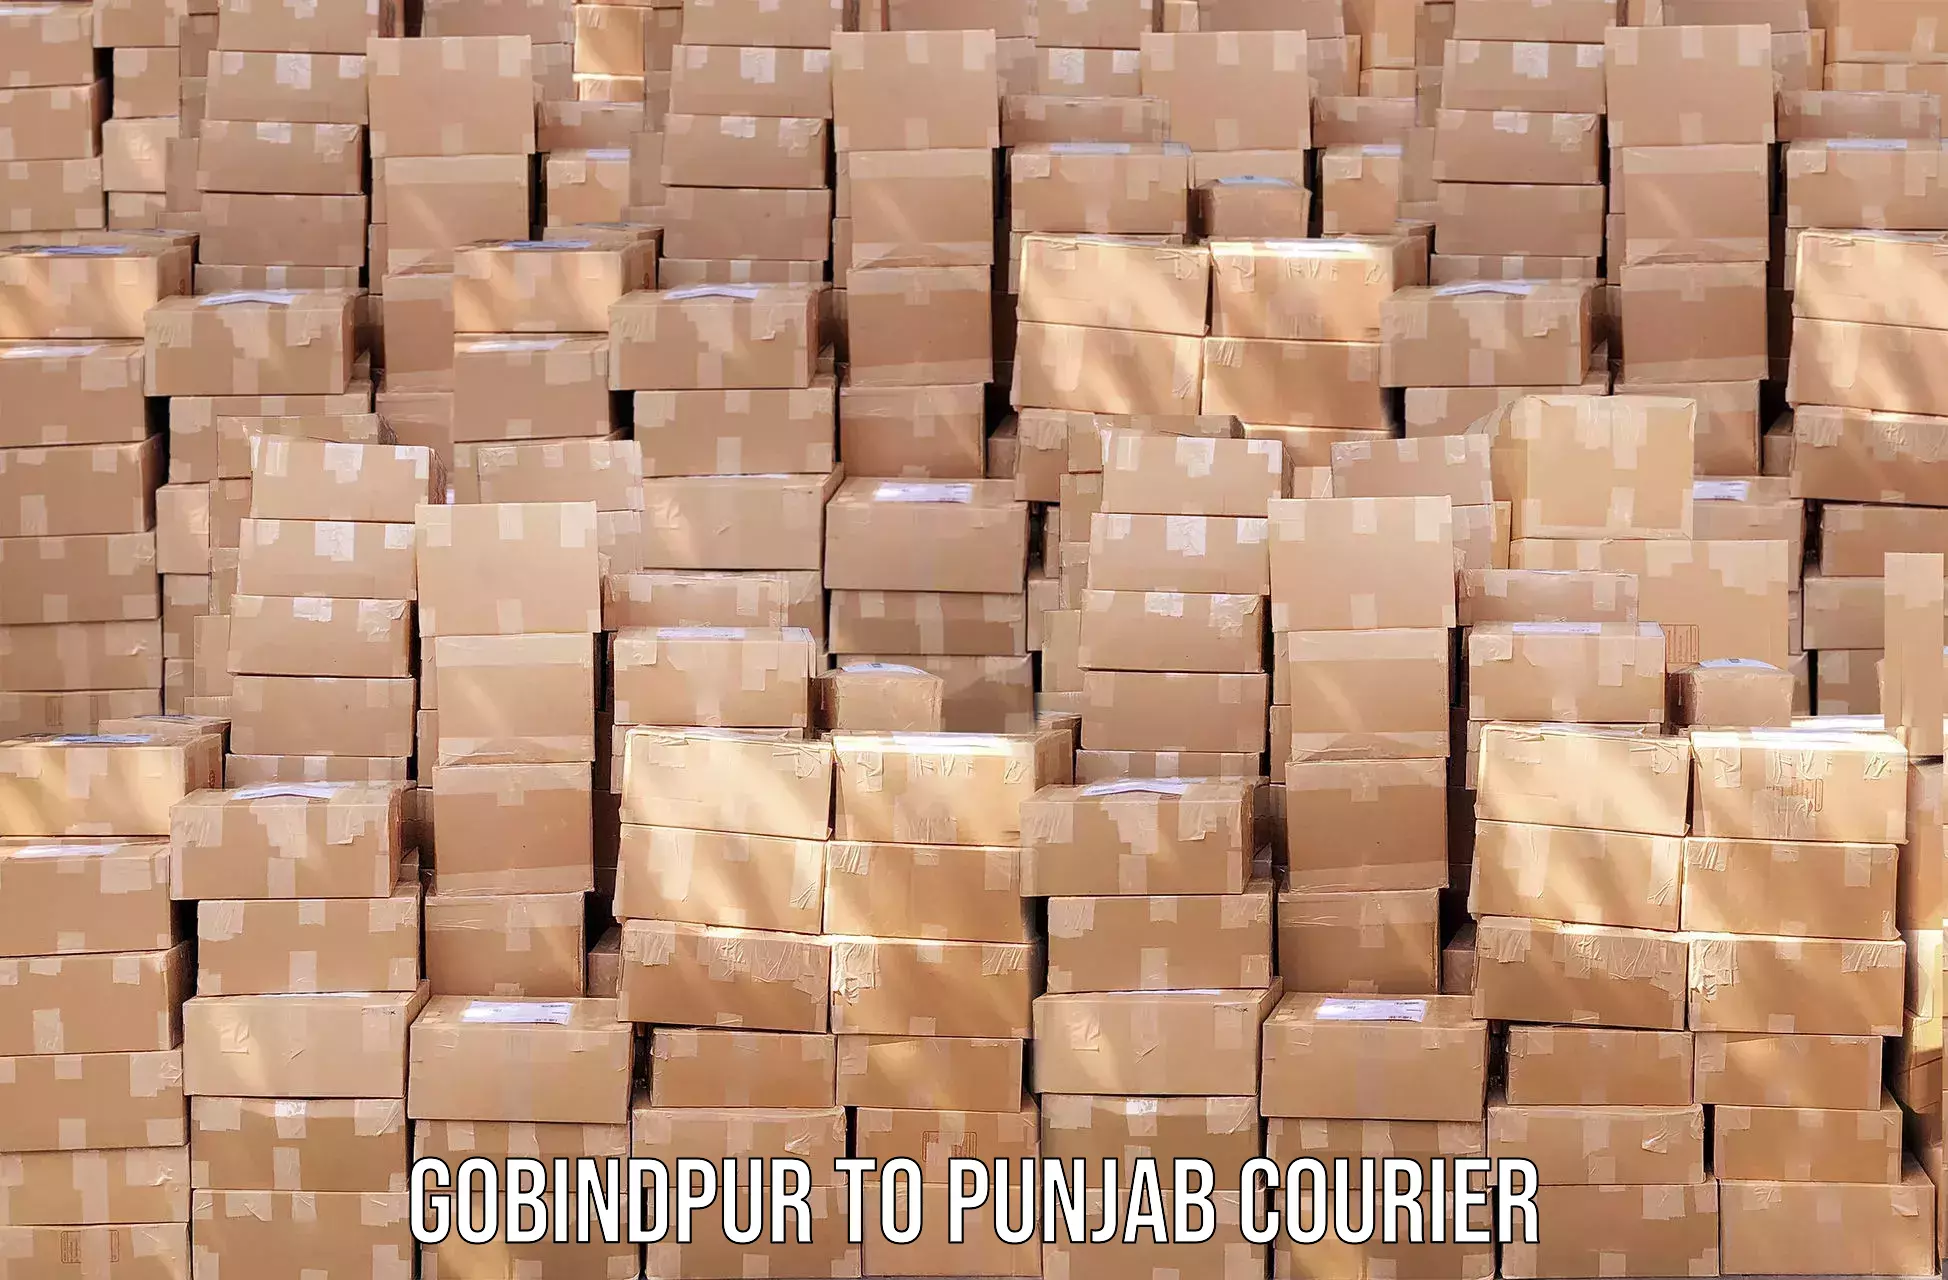 Courier service comparison Gobindpur to Jalalabad